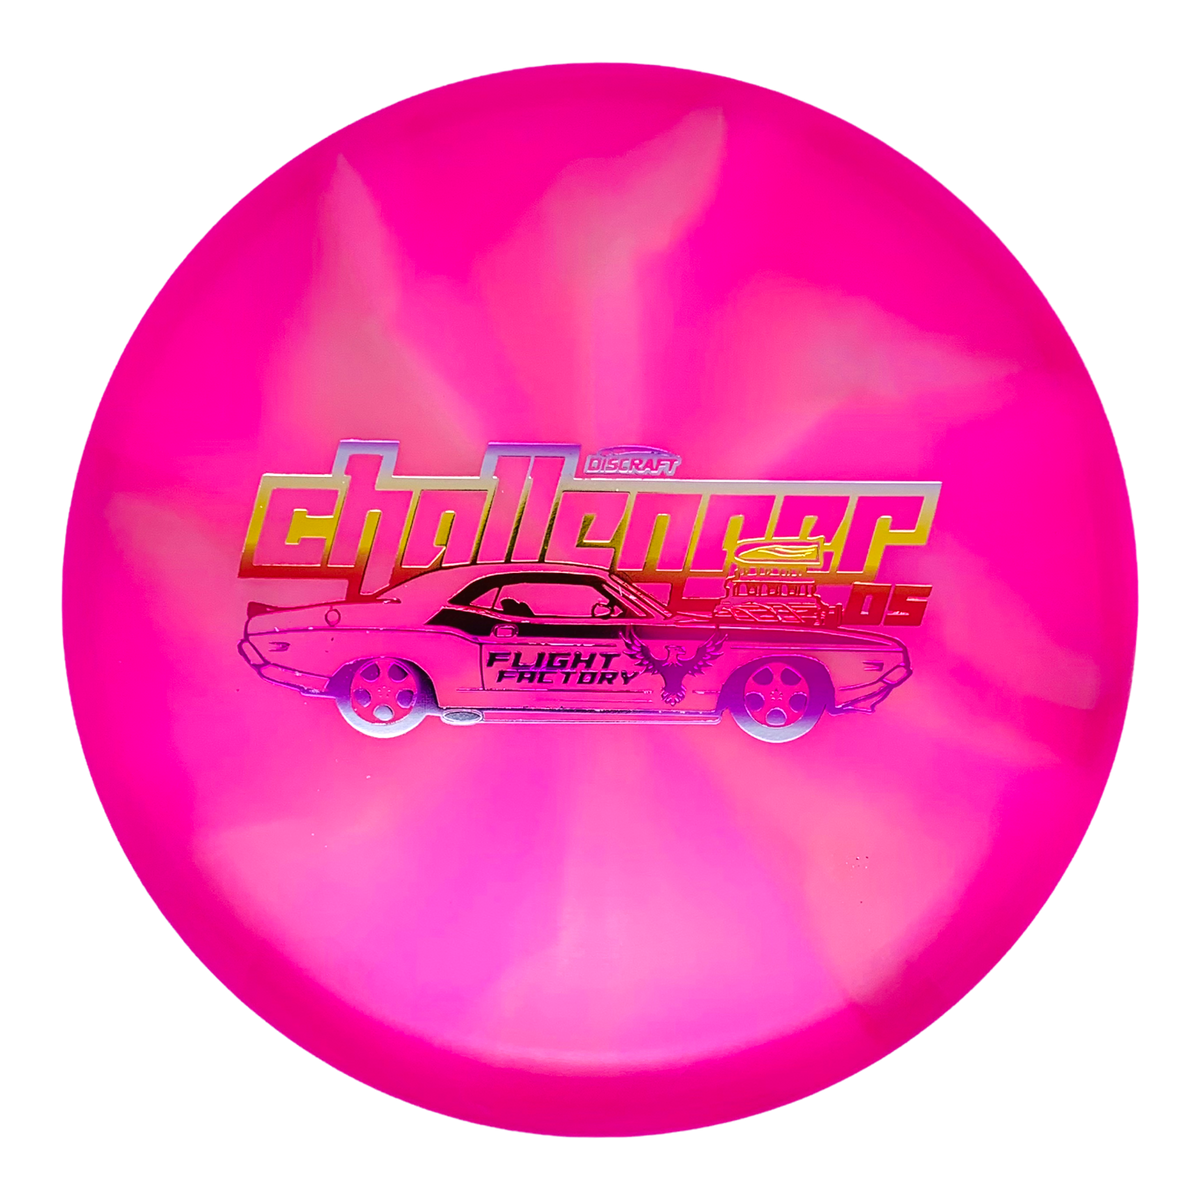 Discraft Tour Z Swirl Challenger OS - Challenger Pinks